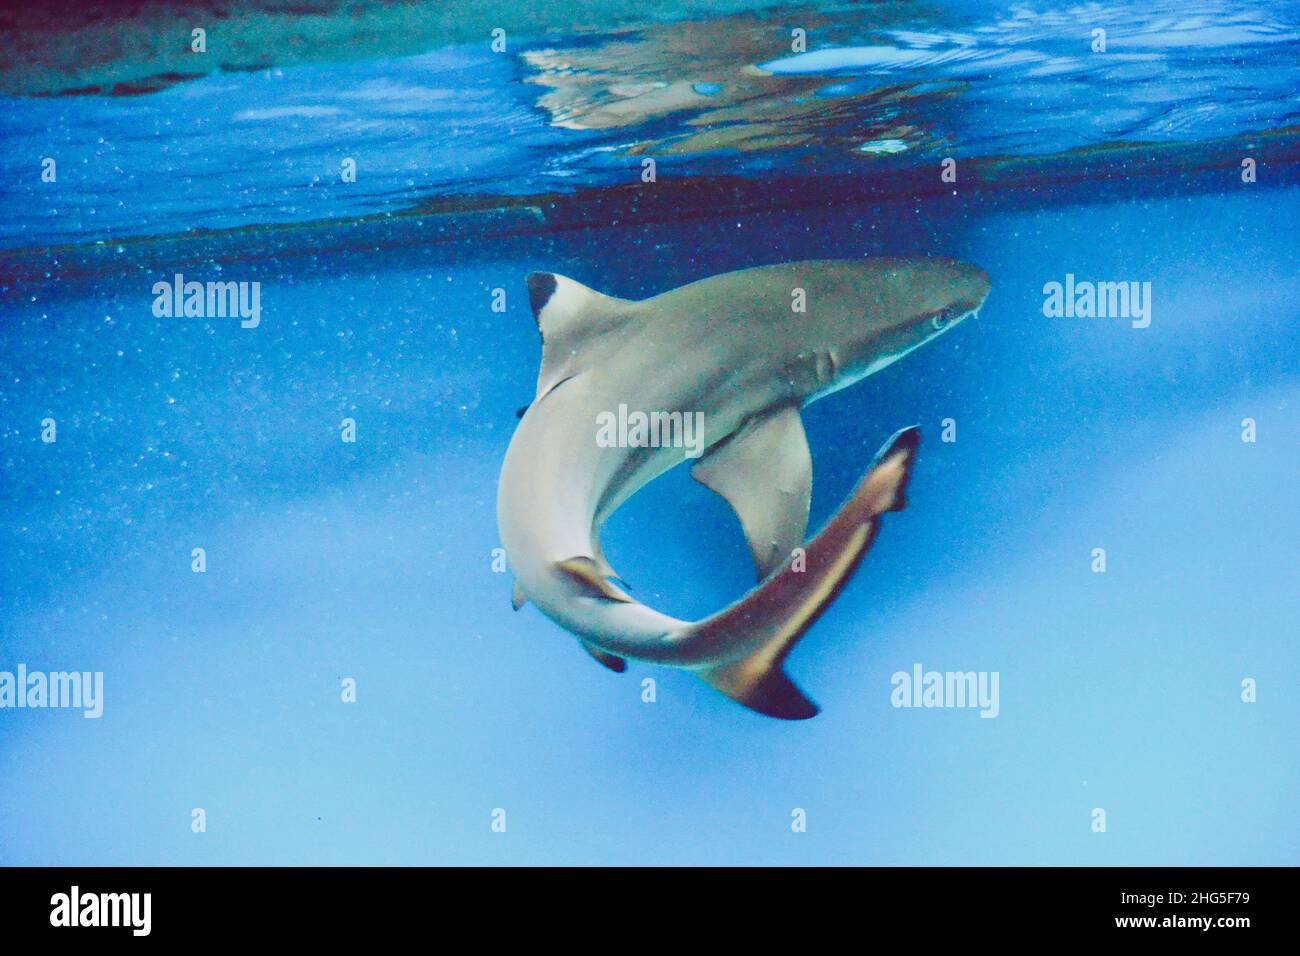 Carcharhinus melanopterus squalo nuoto subacqueo, sfondo blu Foto Stock